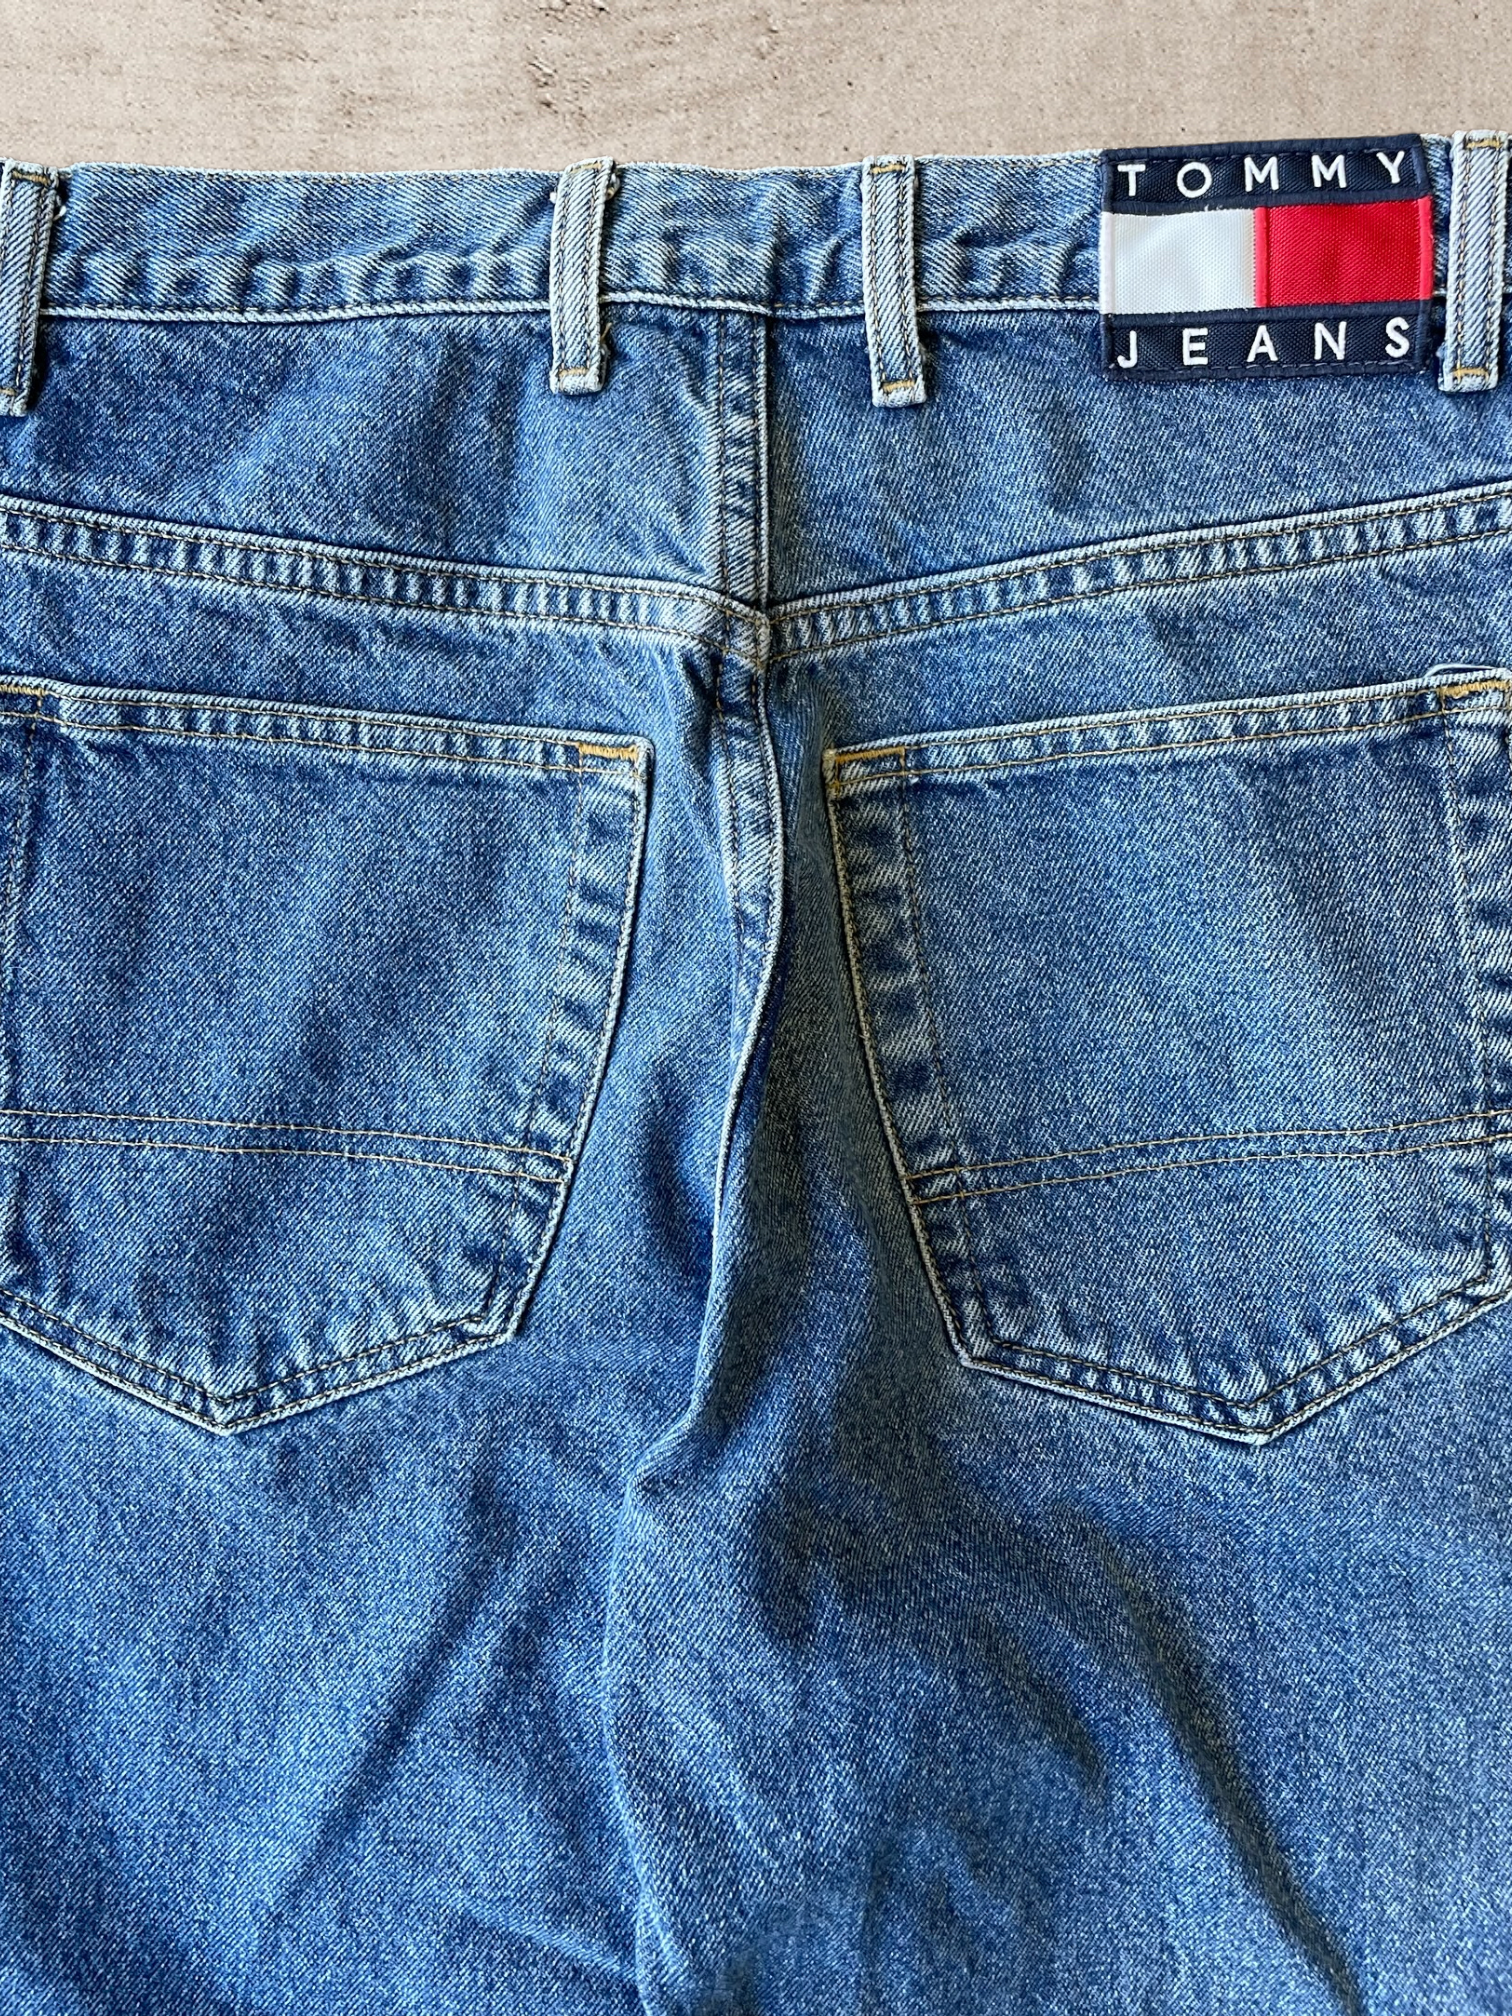 90s Tommy Hilfiger Jeans - 31x31